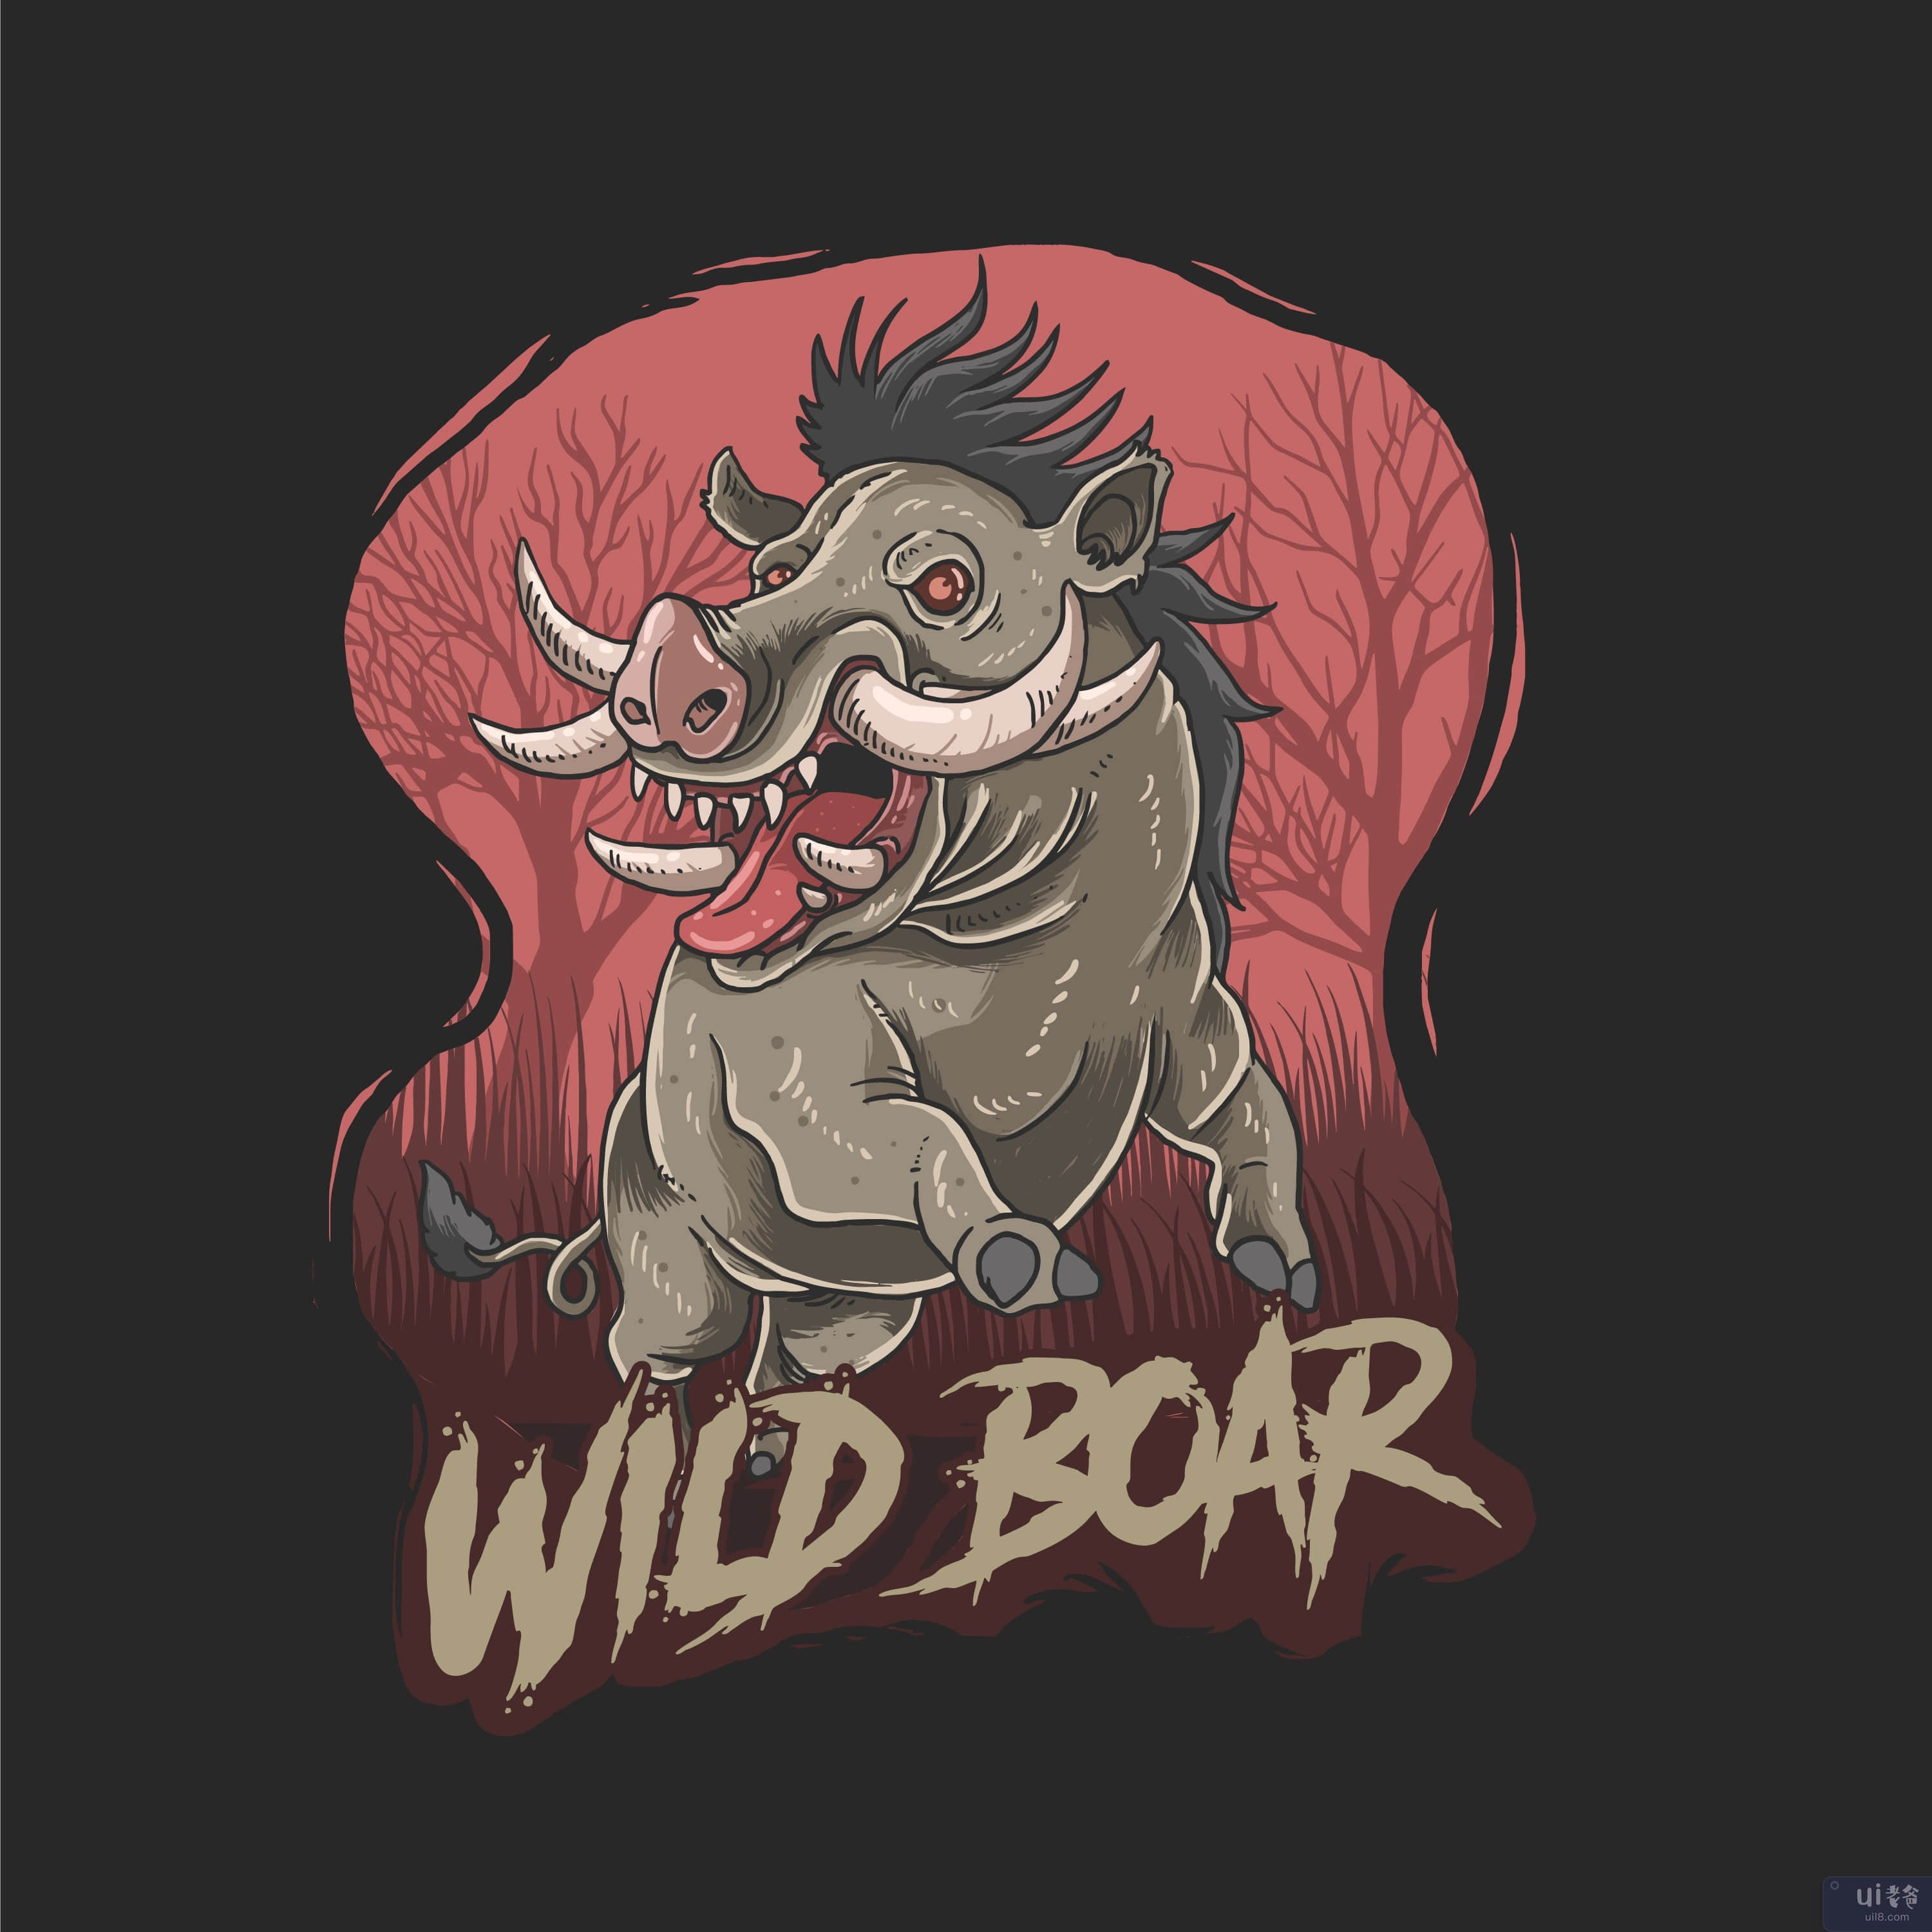 野猪野生动物杀手猎人矢量(Wild boar wild animal killer hunter vector)插图